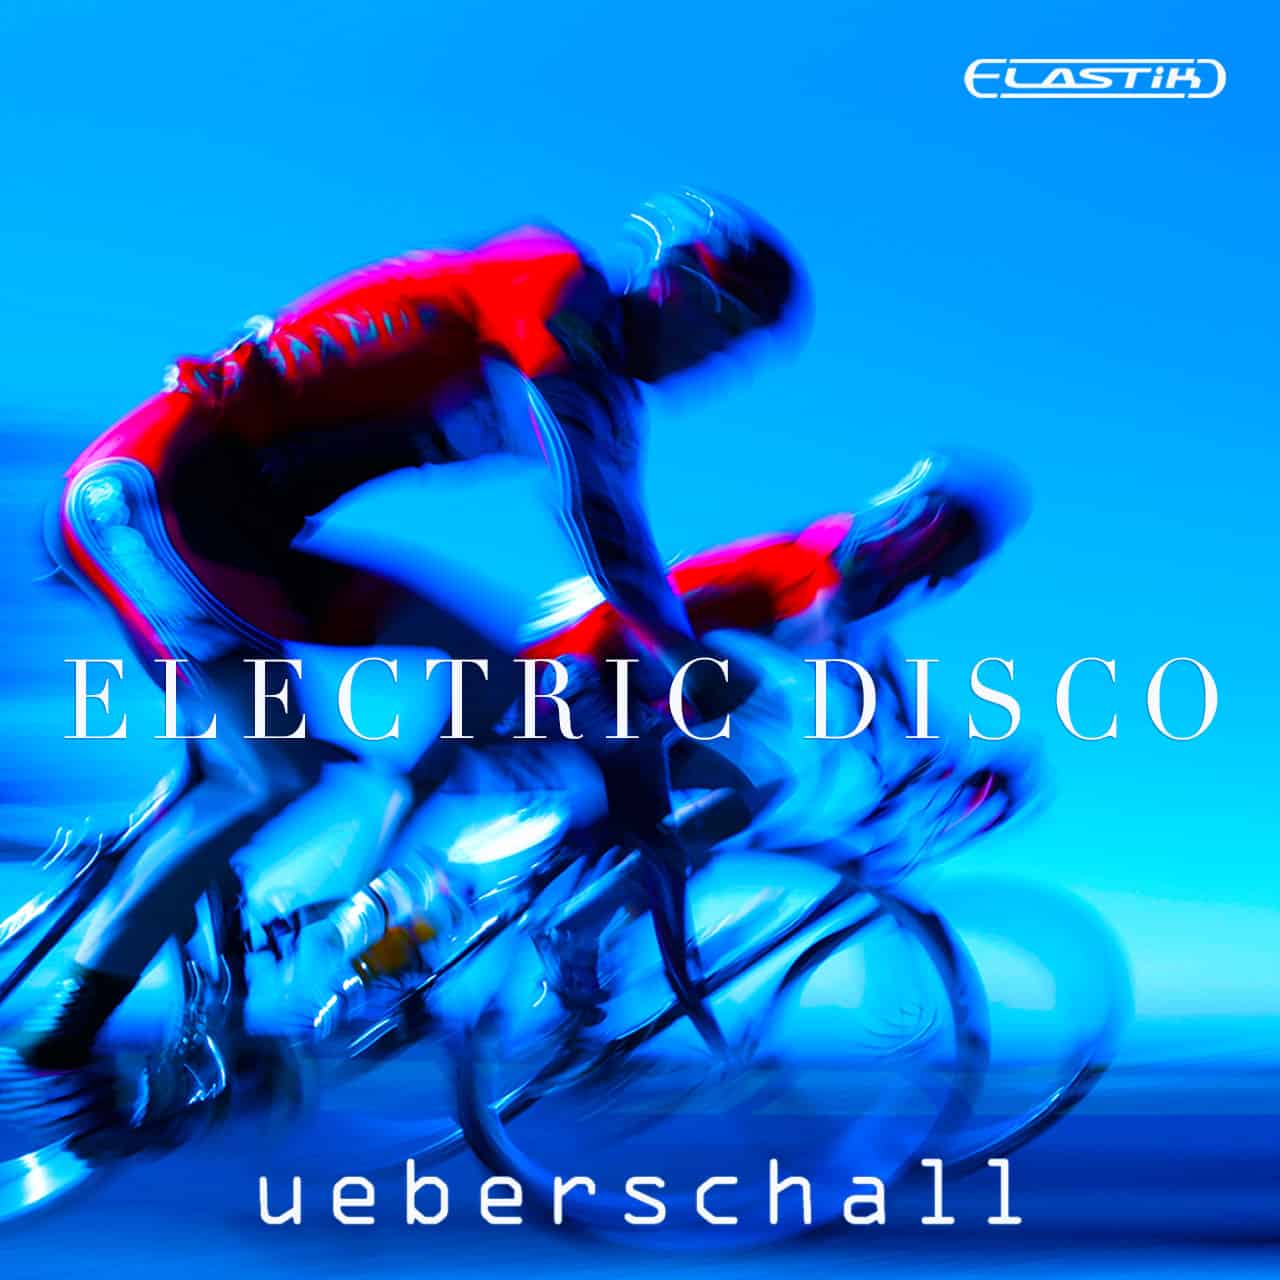 Electric Disco an Elastik Soundset